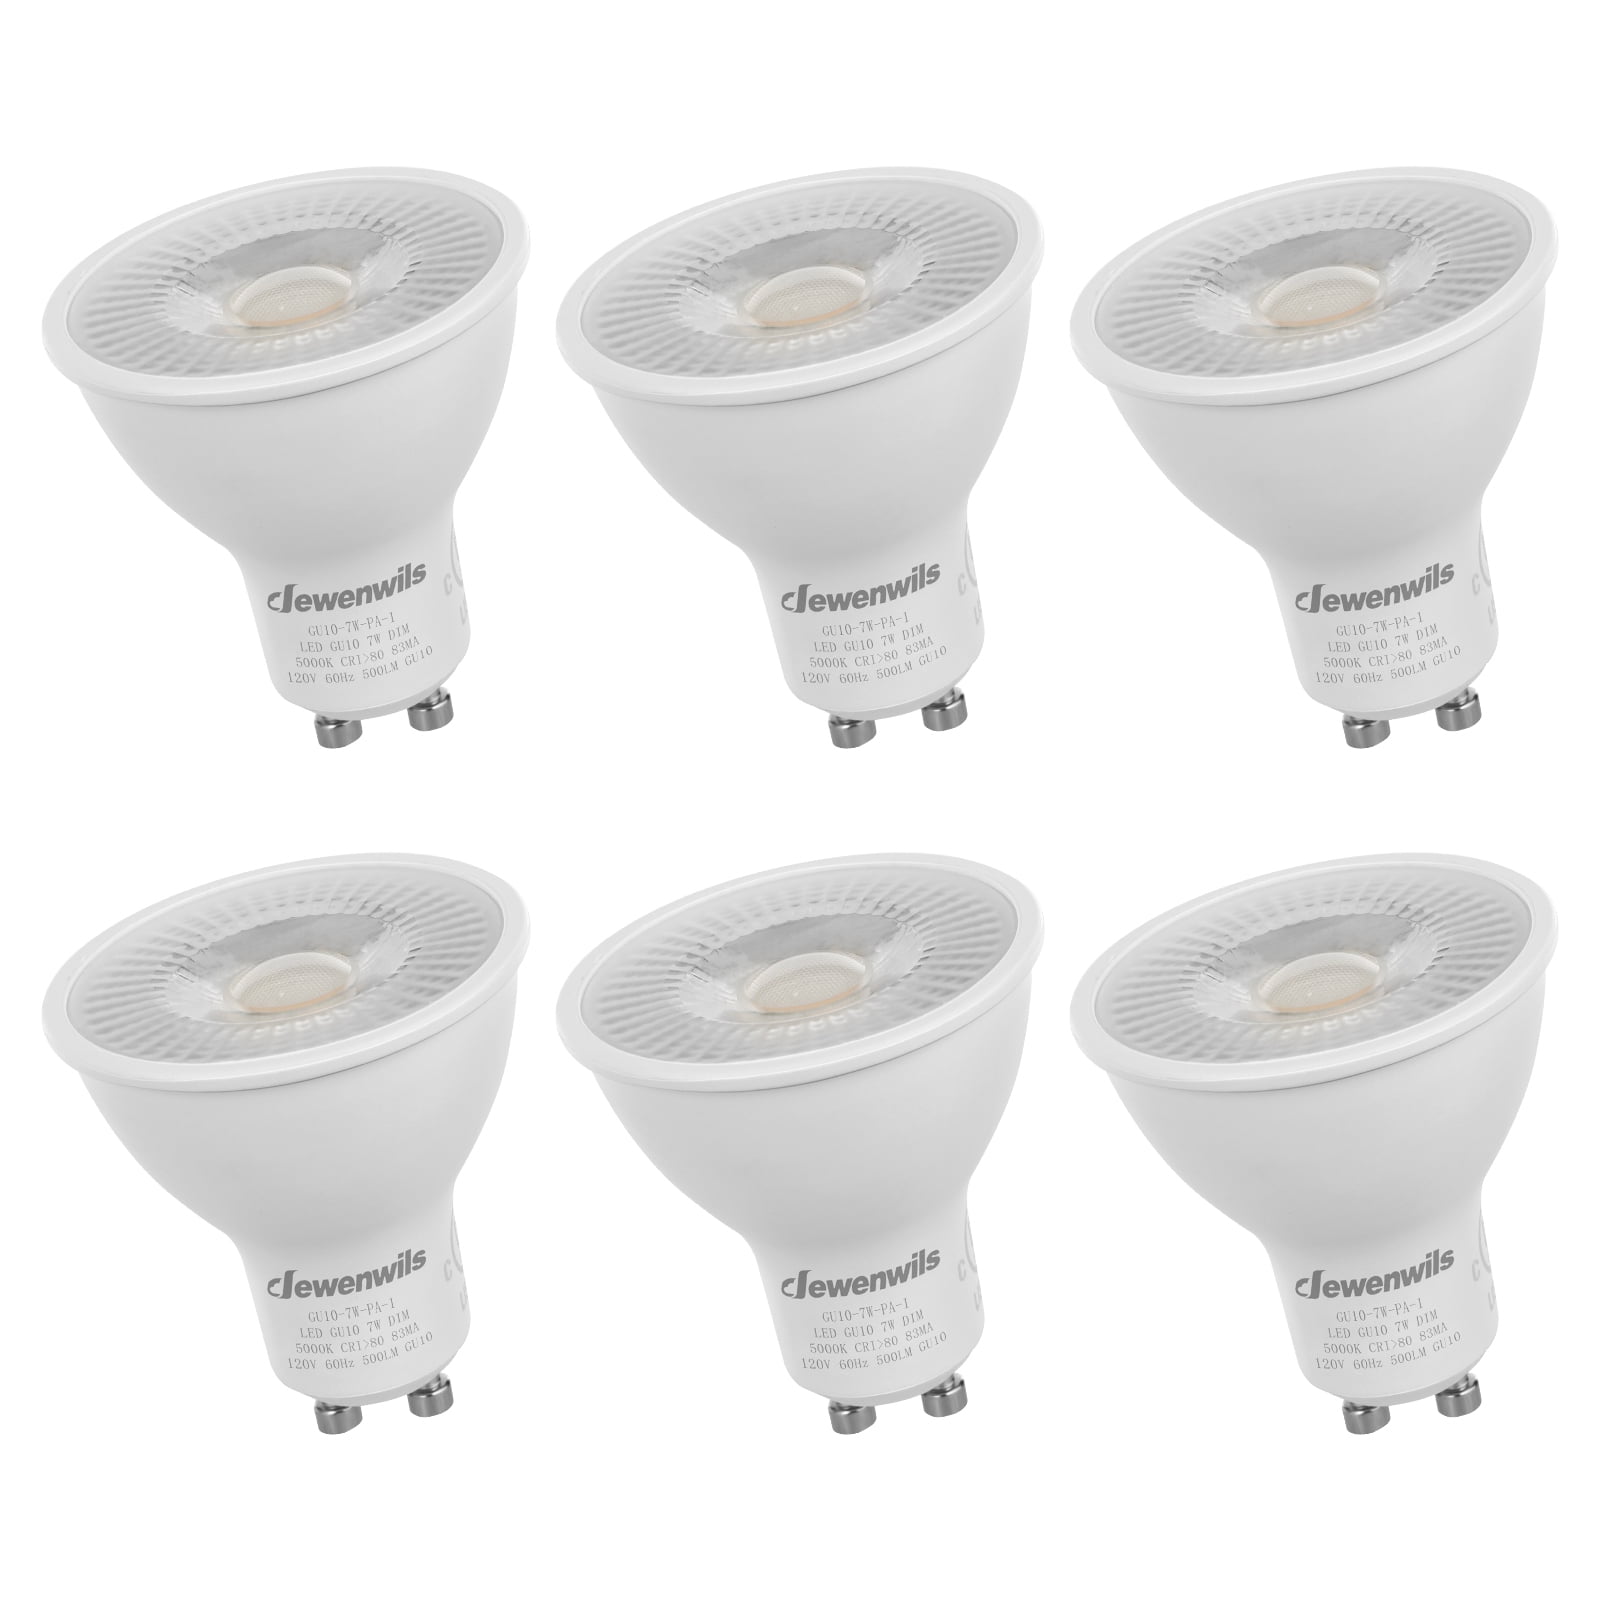 DEWENWILS GU10 LED Dimmable Bulb, 5000K Daylight Track Lighting Bulb, 7W 50W Equivalent Bulbs, 6 - Walmart.com